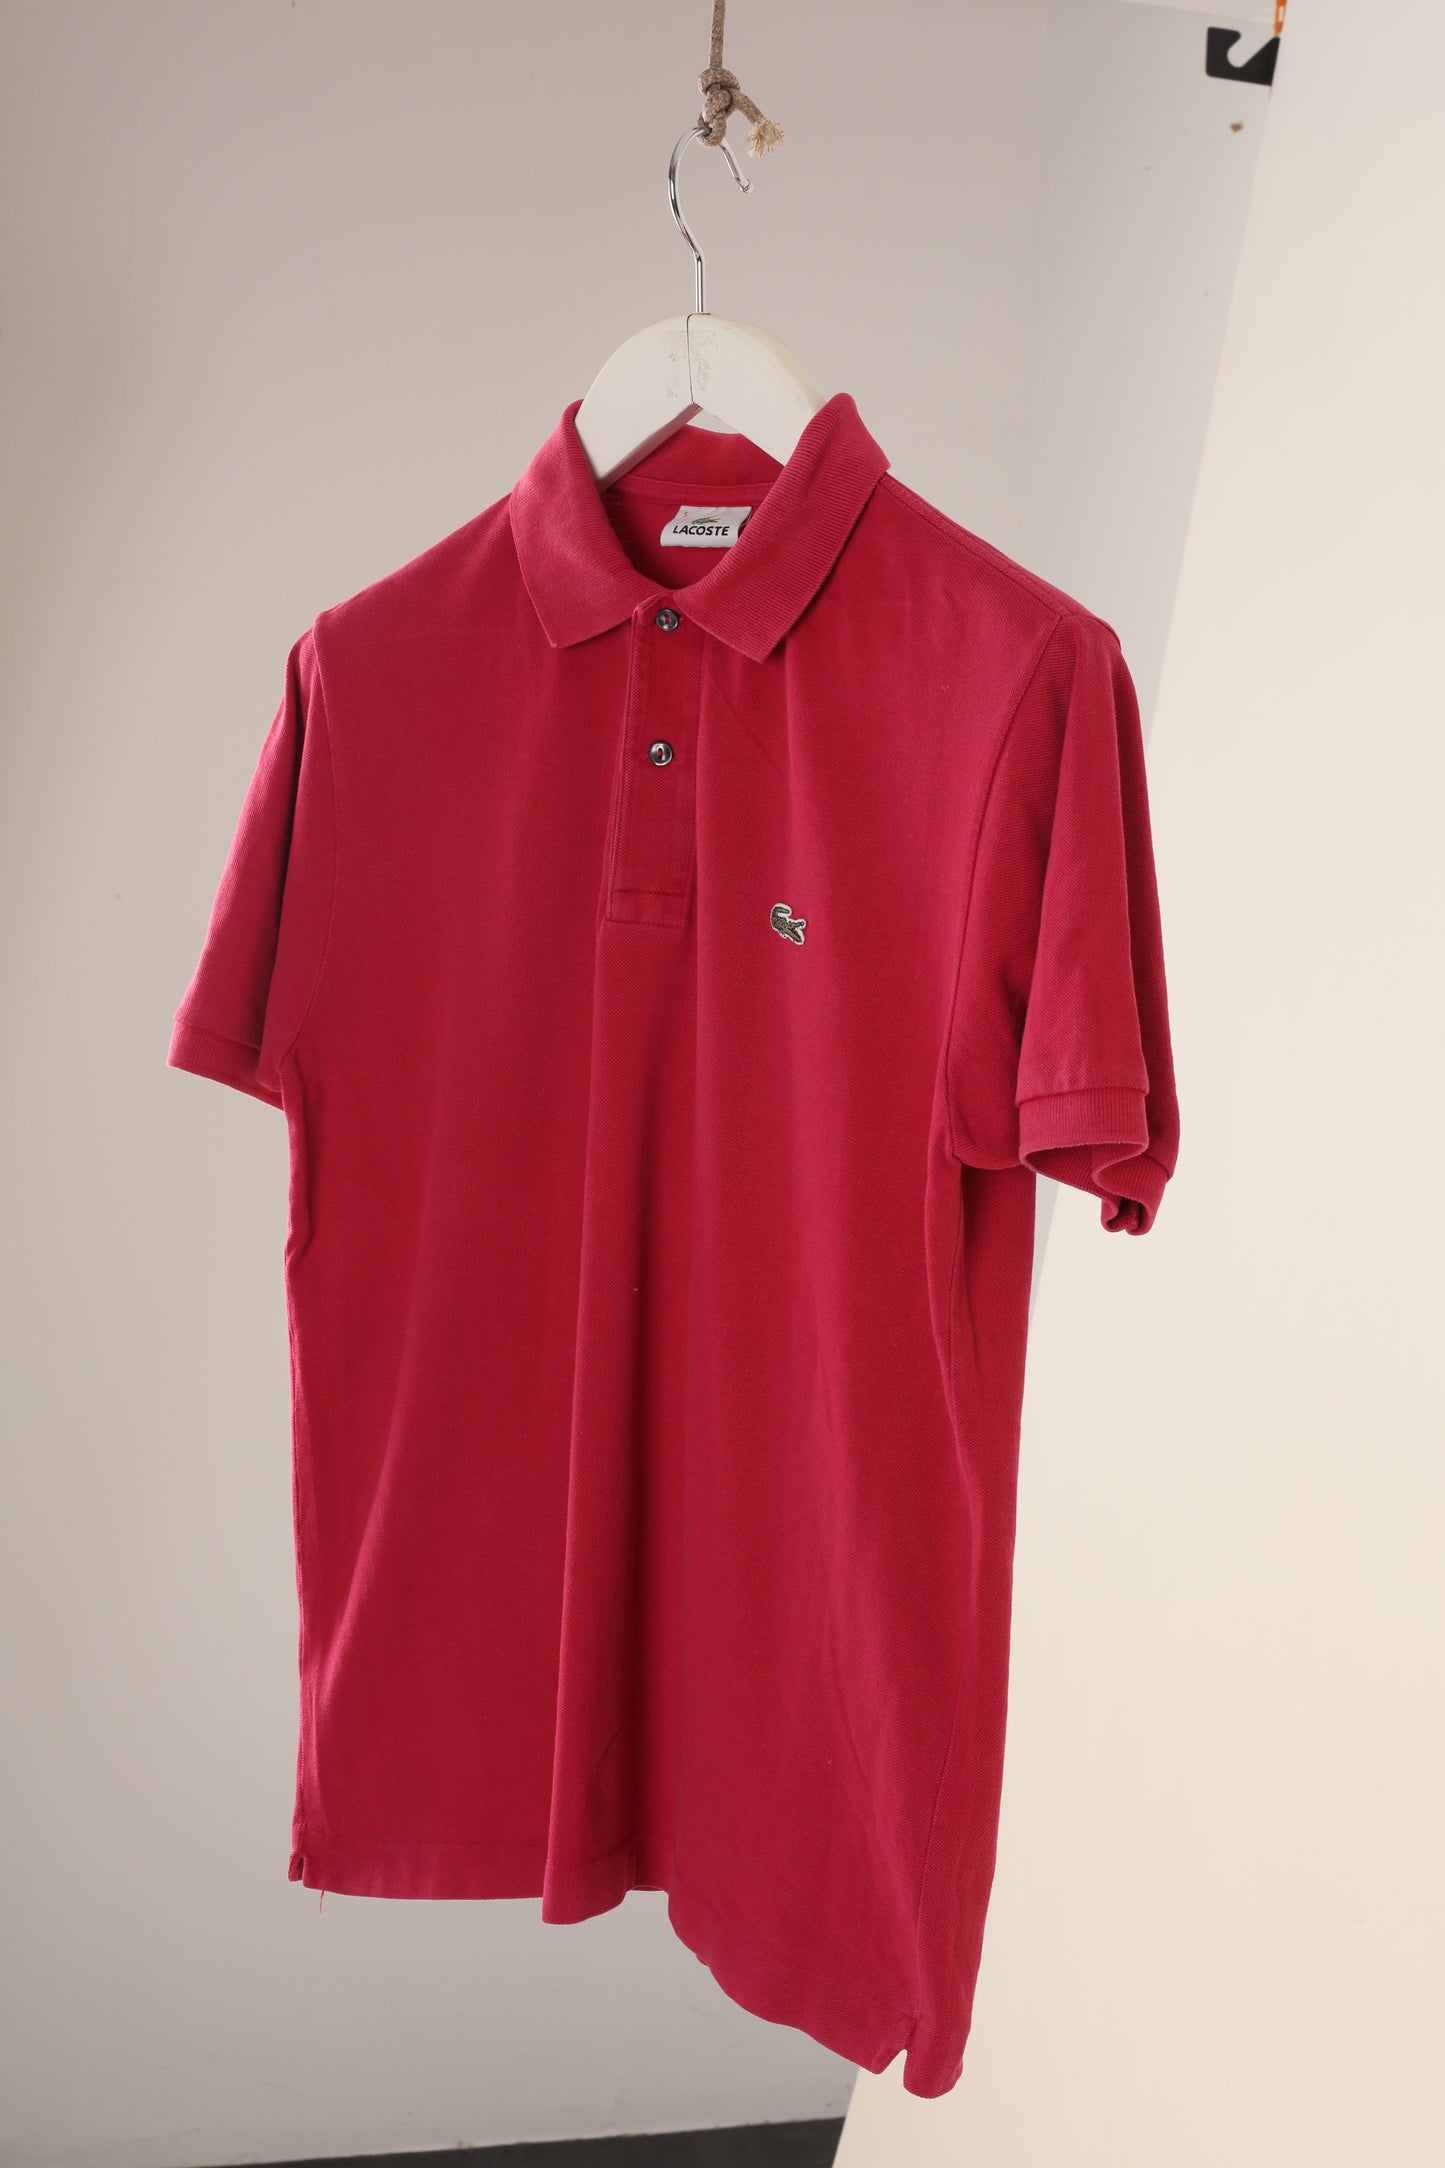 Vintage Lacoste polo shirt (5)